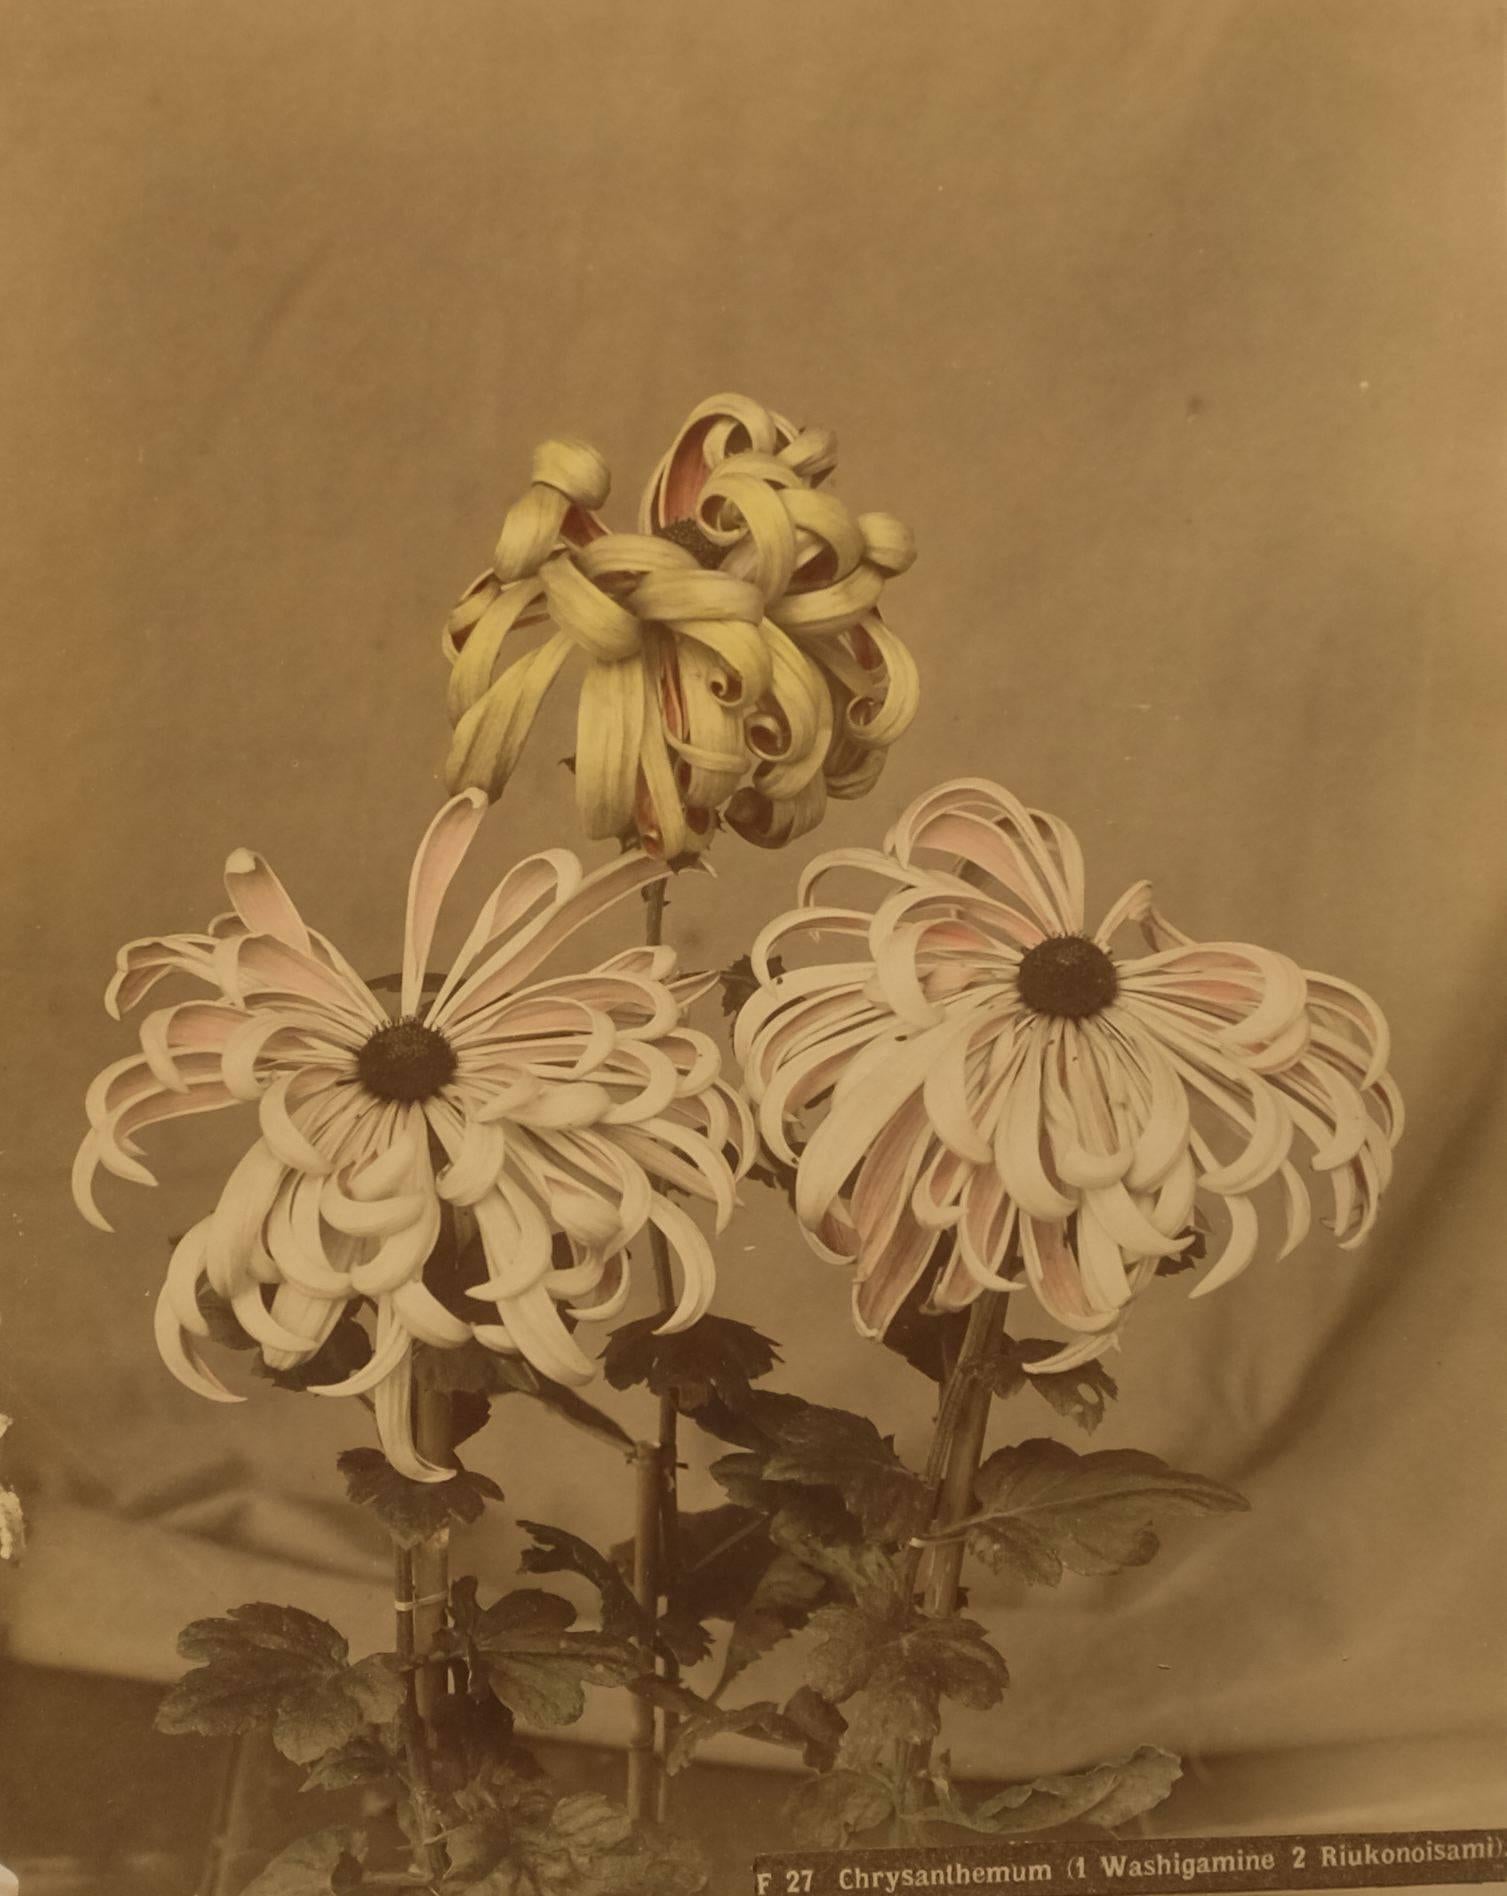 Unknown Still-Life Photograph - Chrysanthemum (1 Washigamine 2 Riukonoisami)